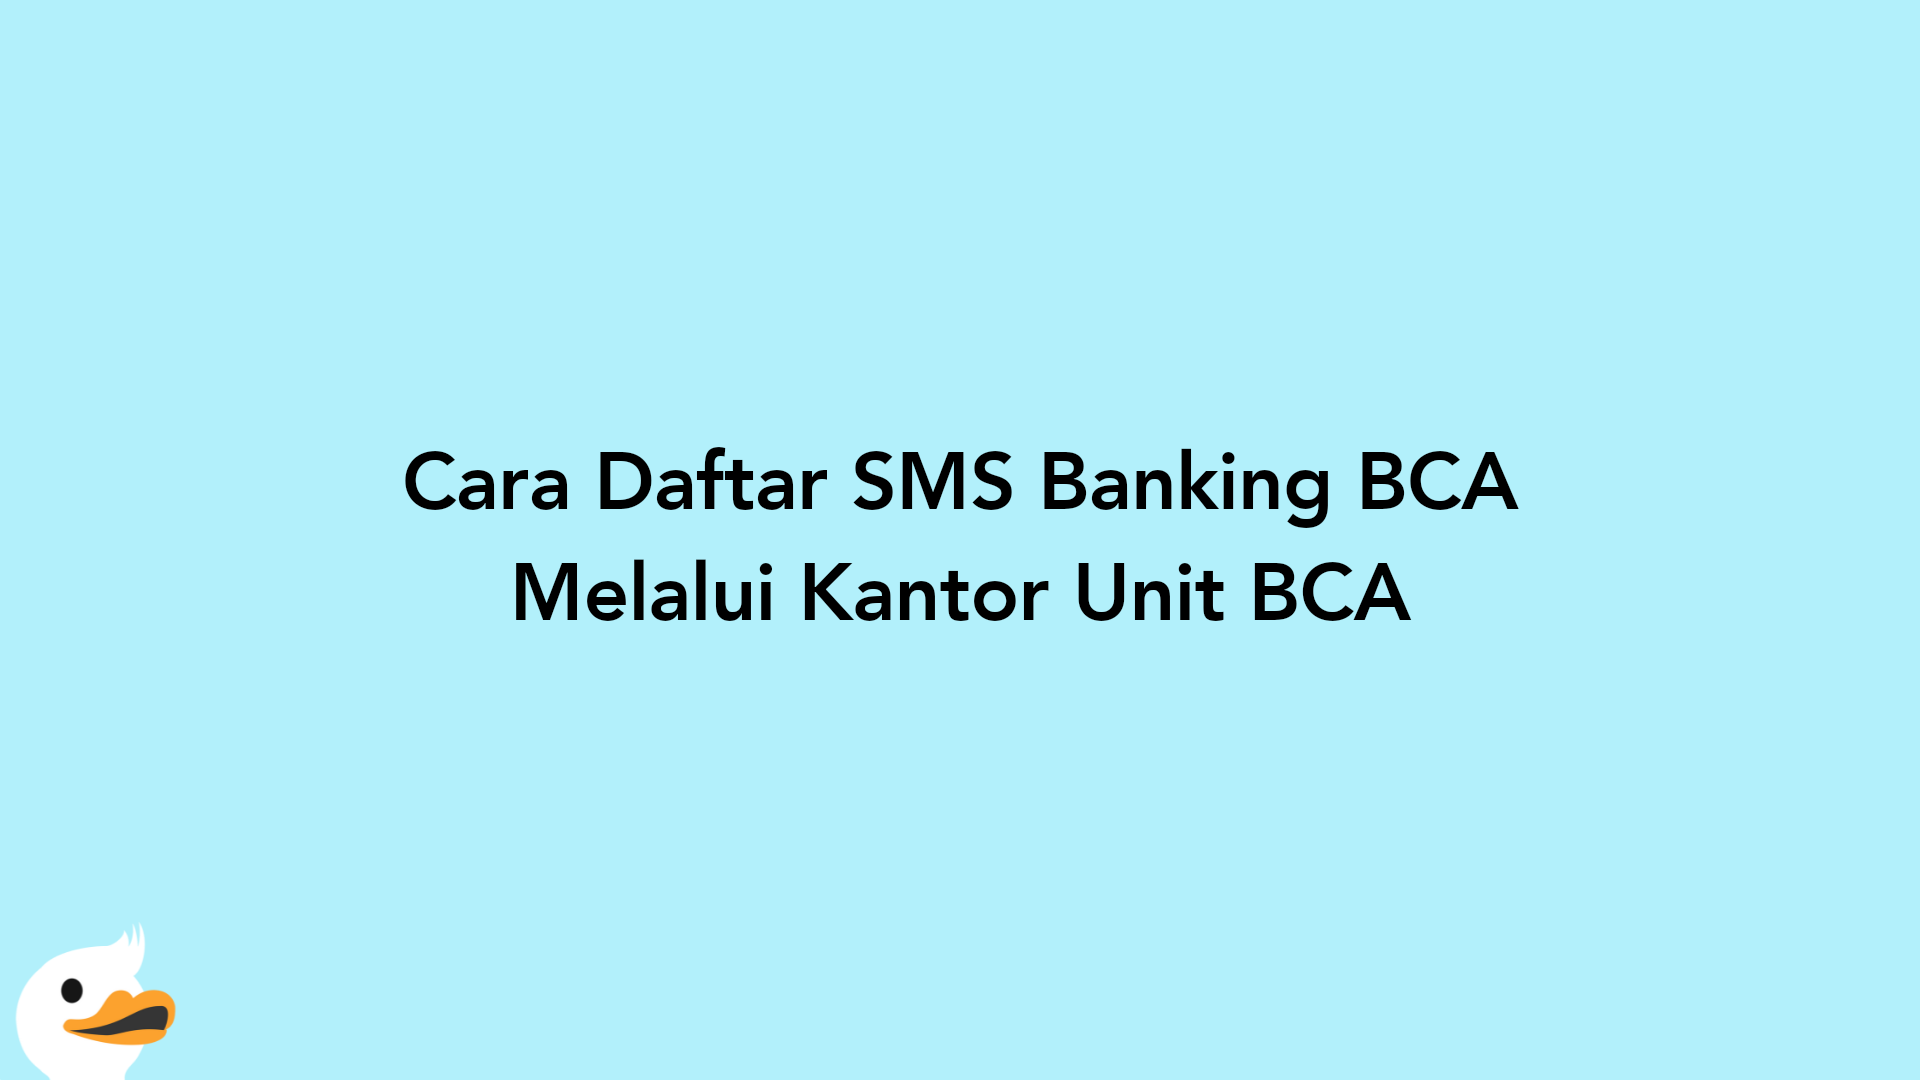 Cara Daftar SMS Banking BCA Melalui Kantor Unit BCA